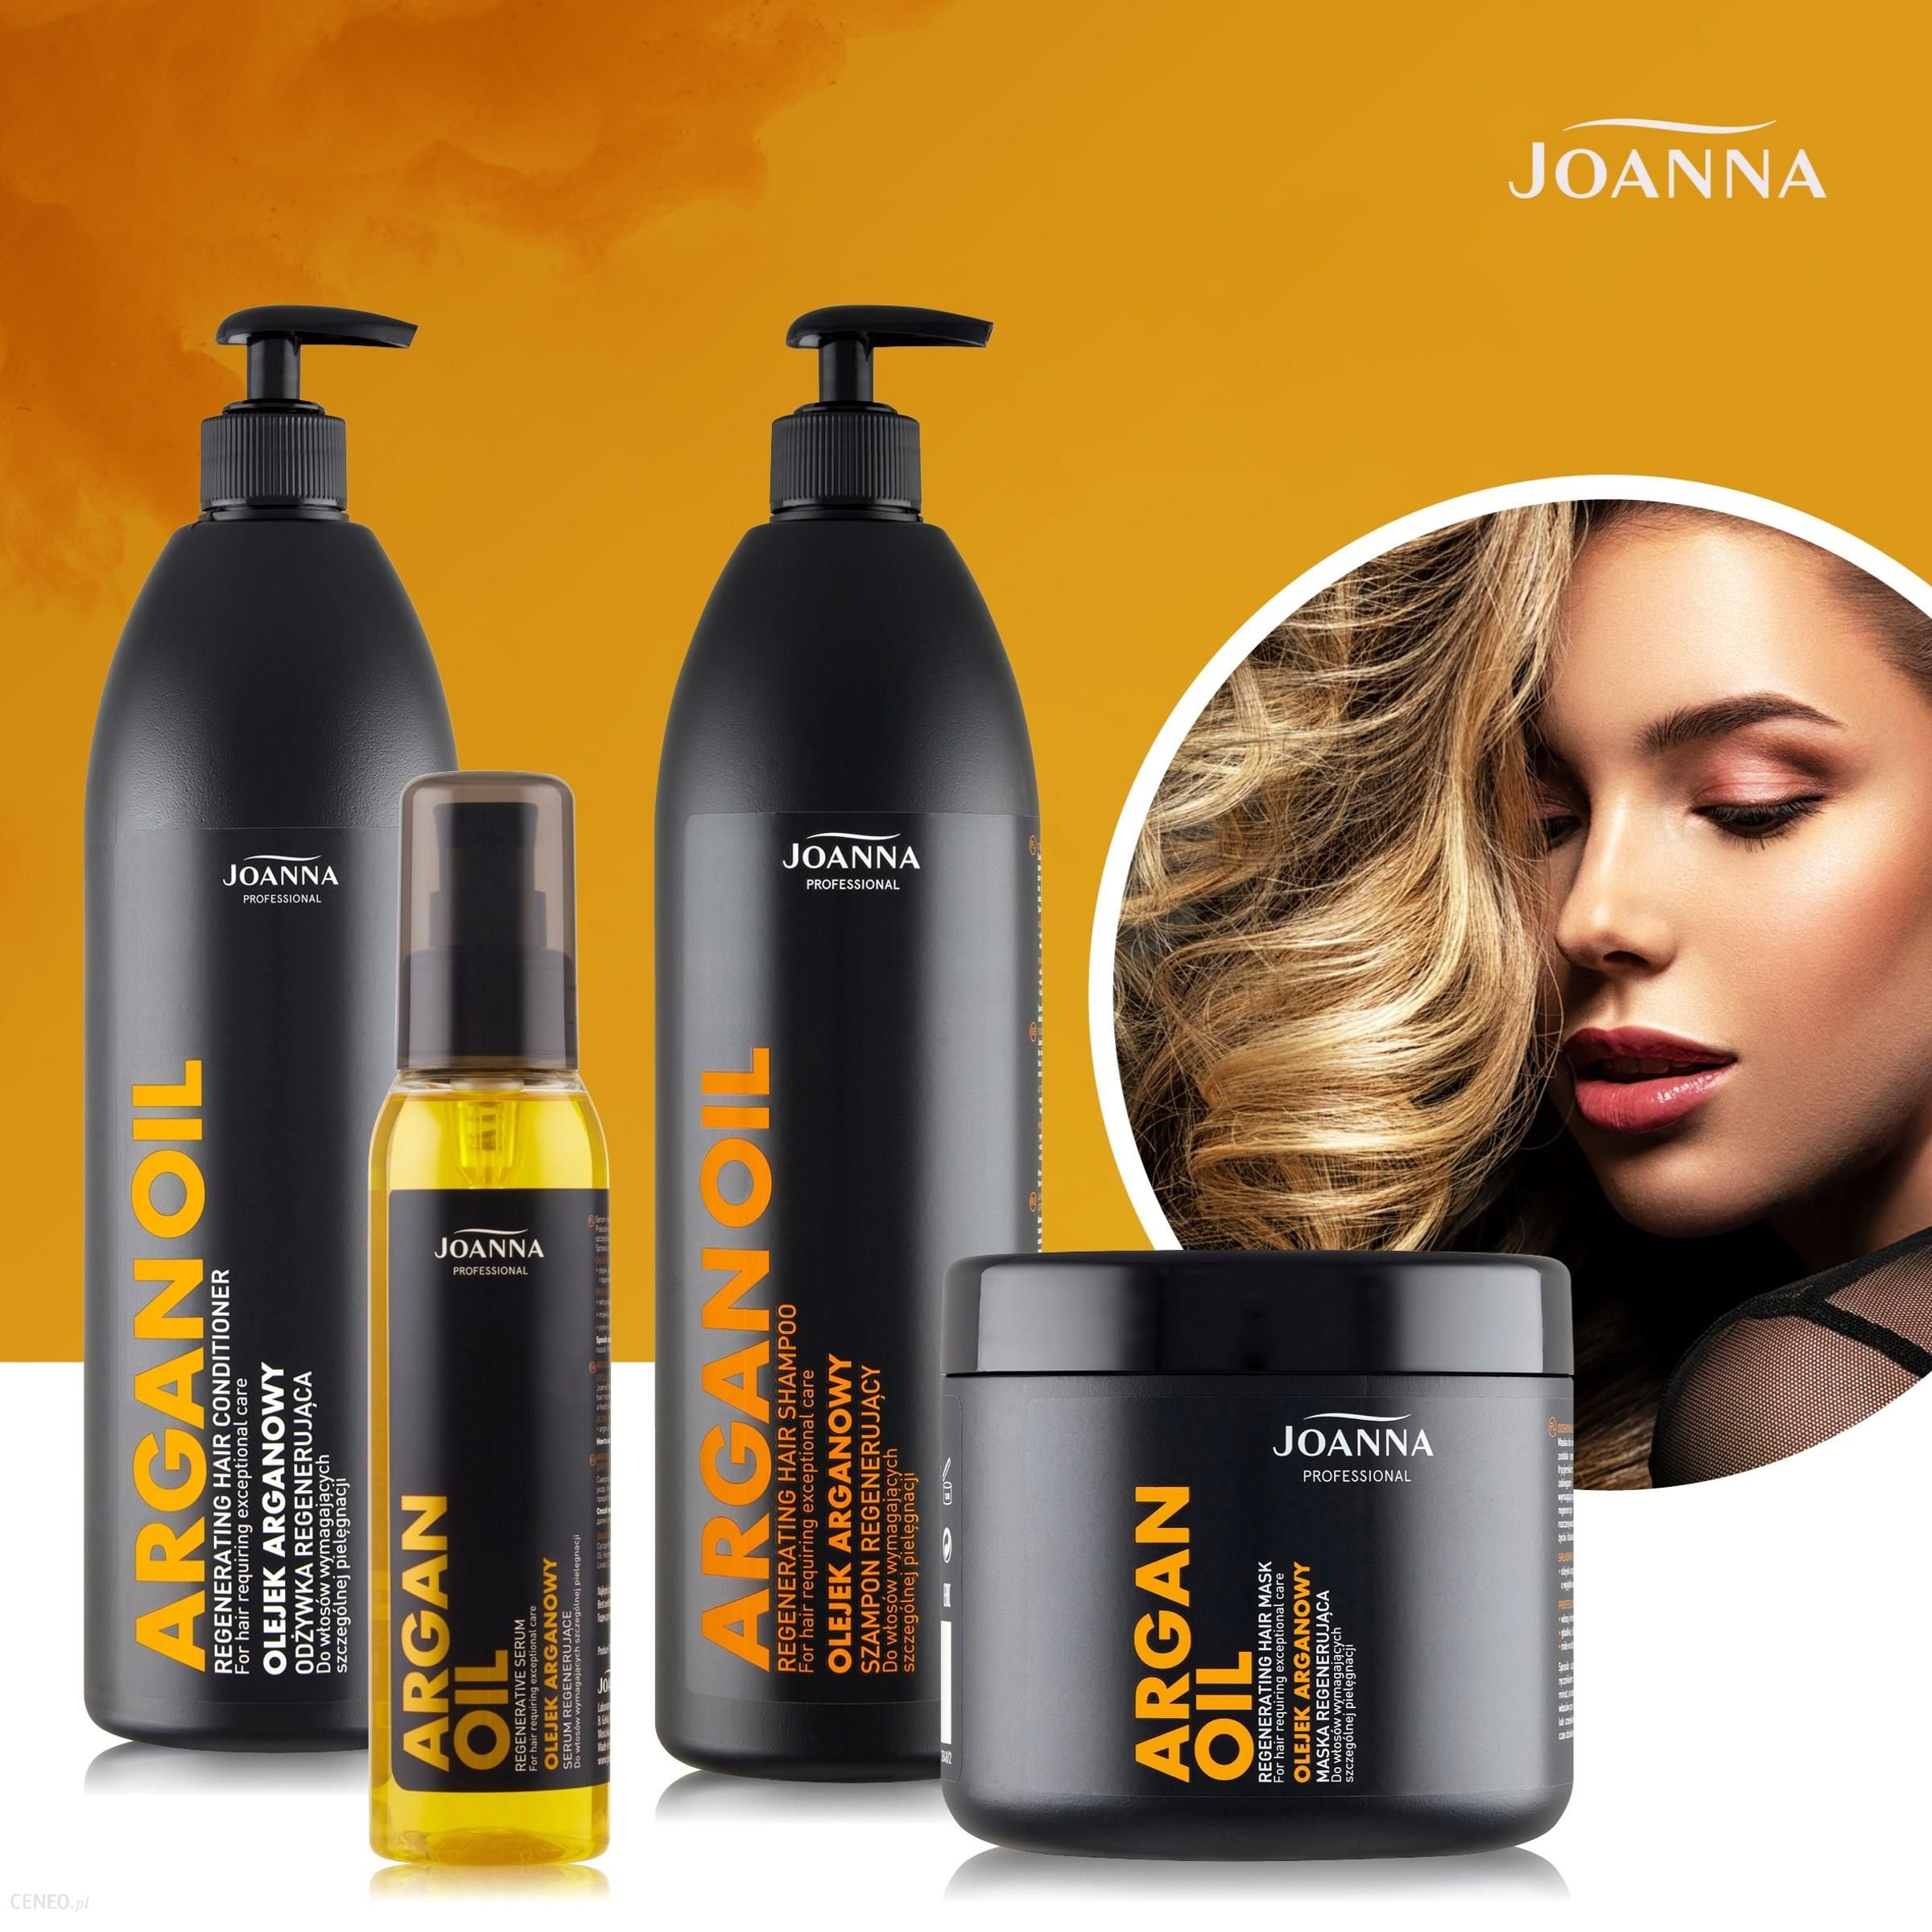 joanna argan oil szampon do włosów